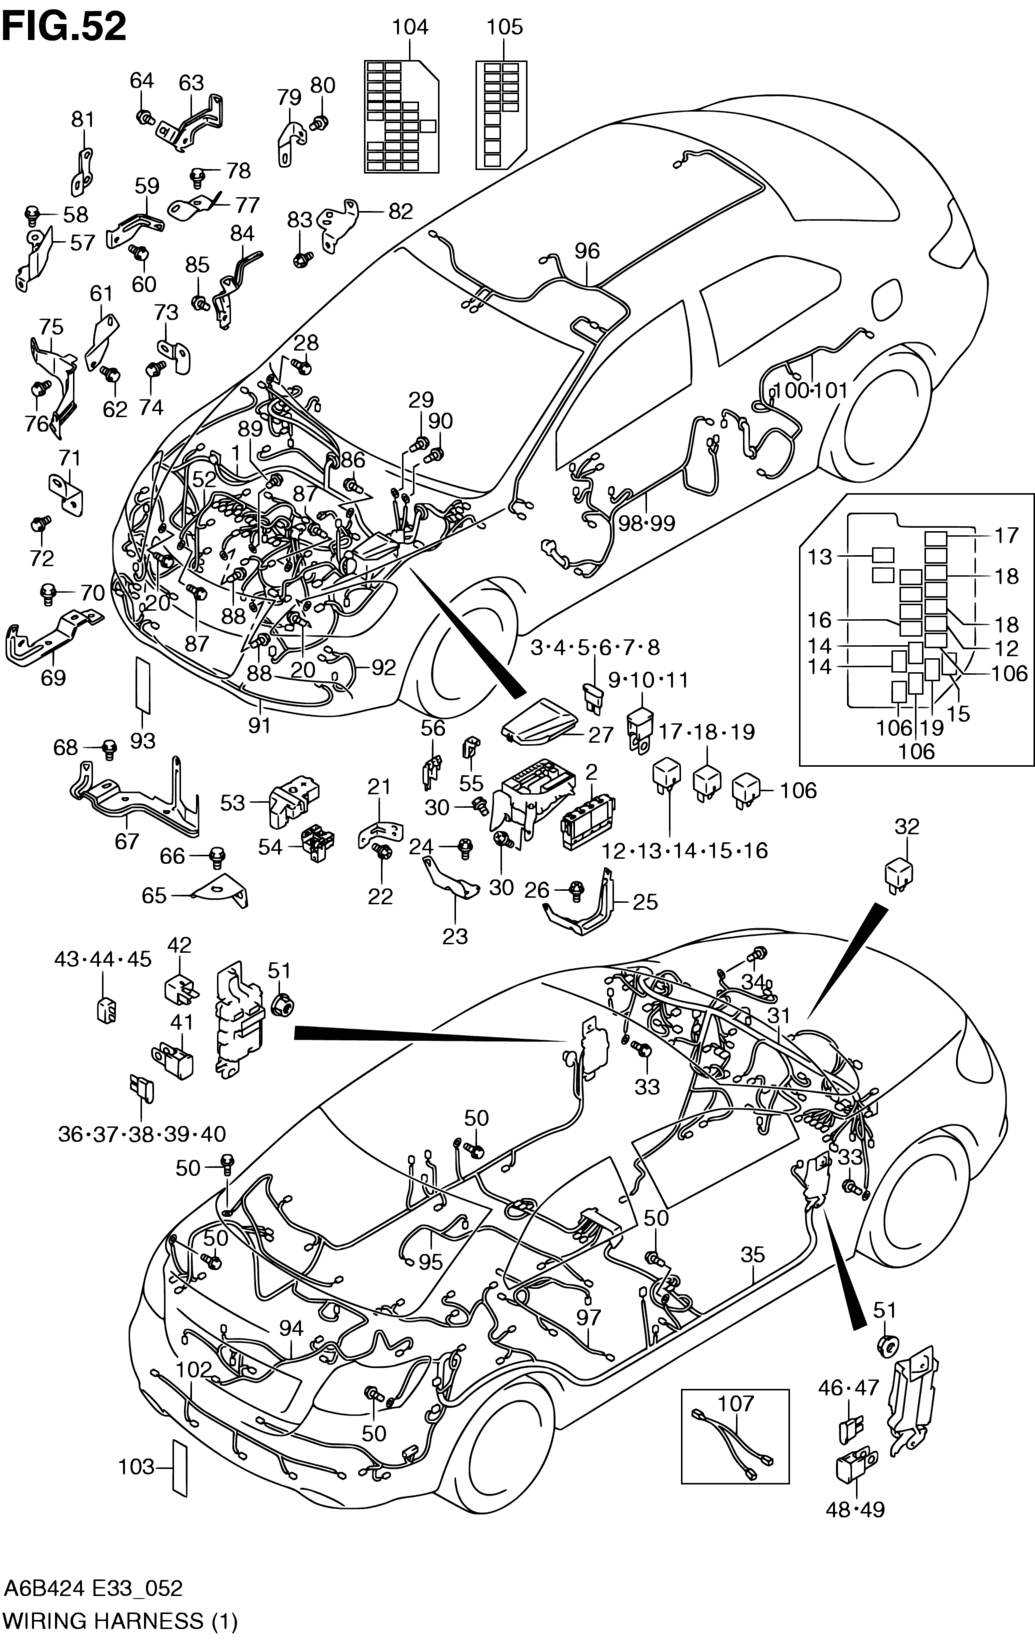 Suzuki Kizashi Wiring Harnes - Wiring Diagram Library